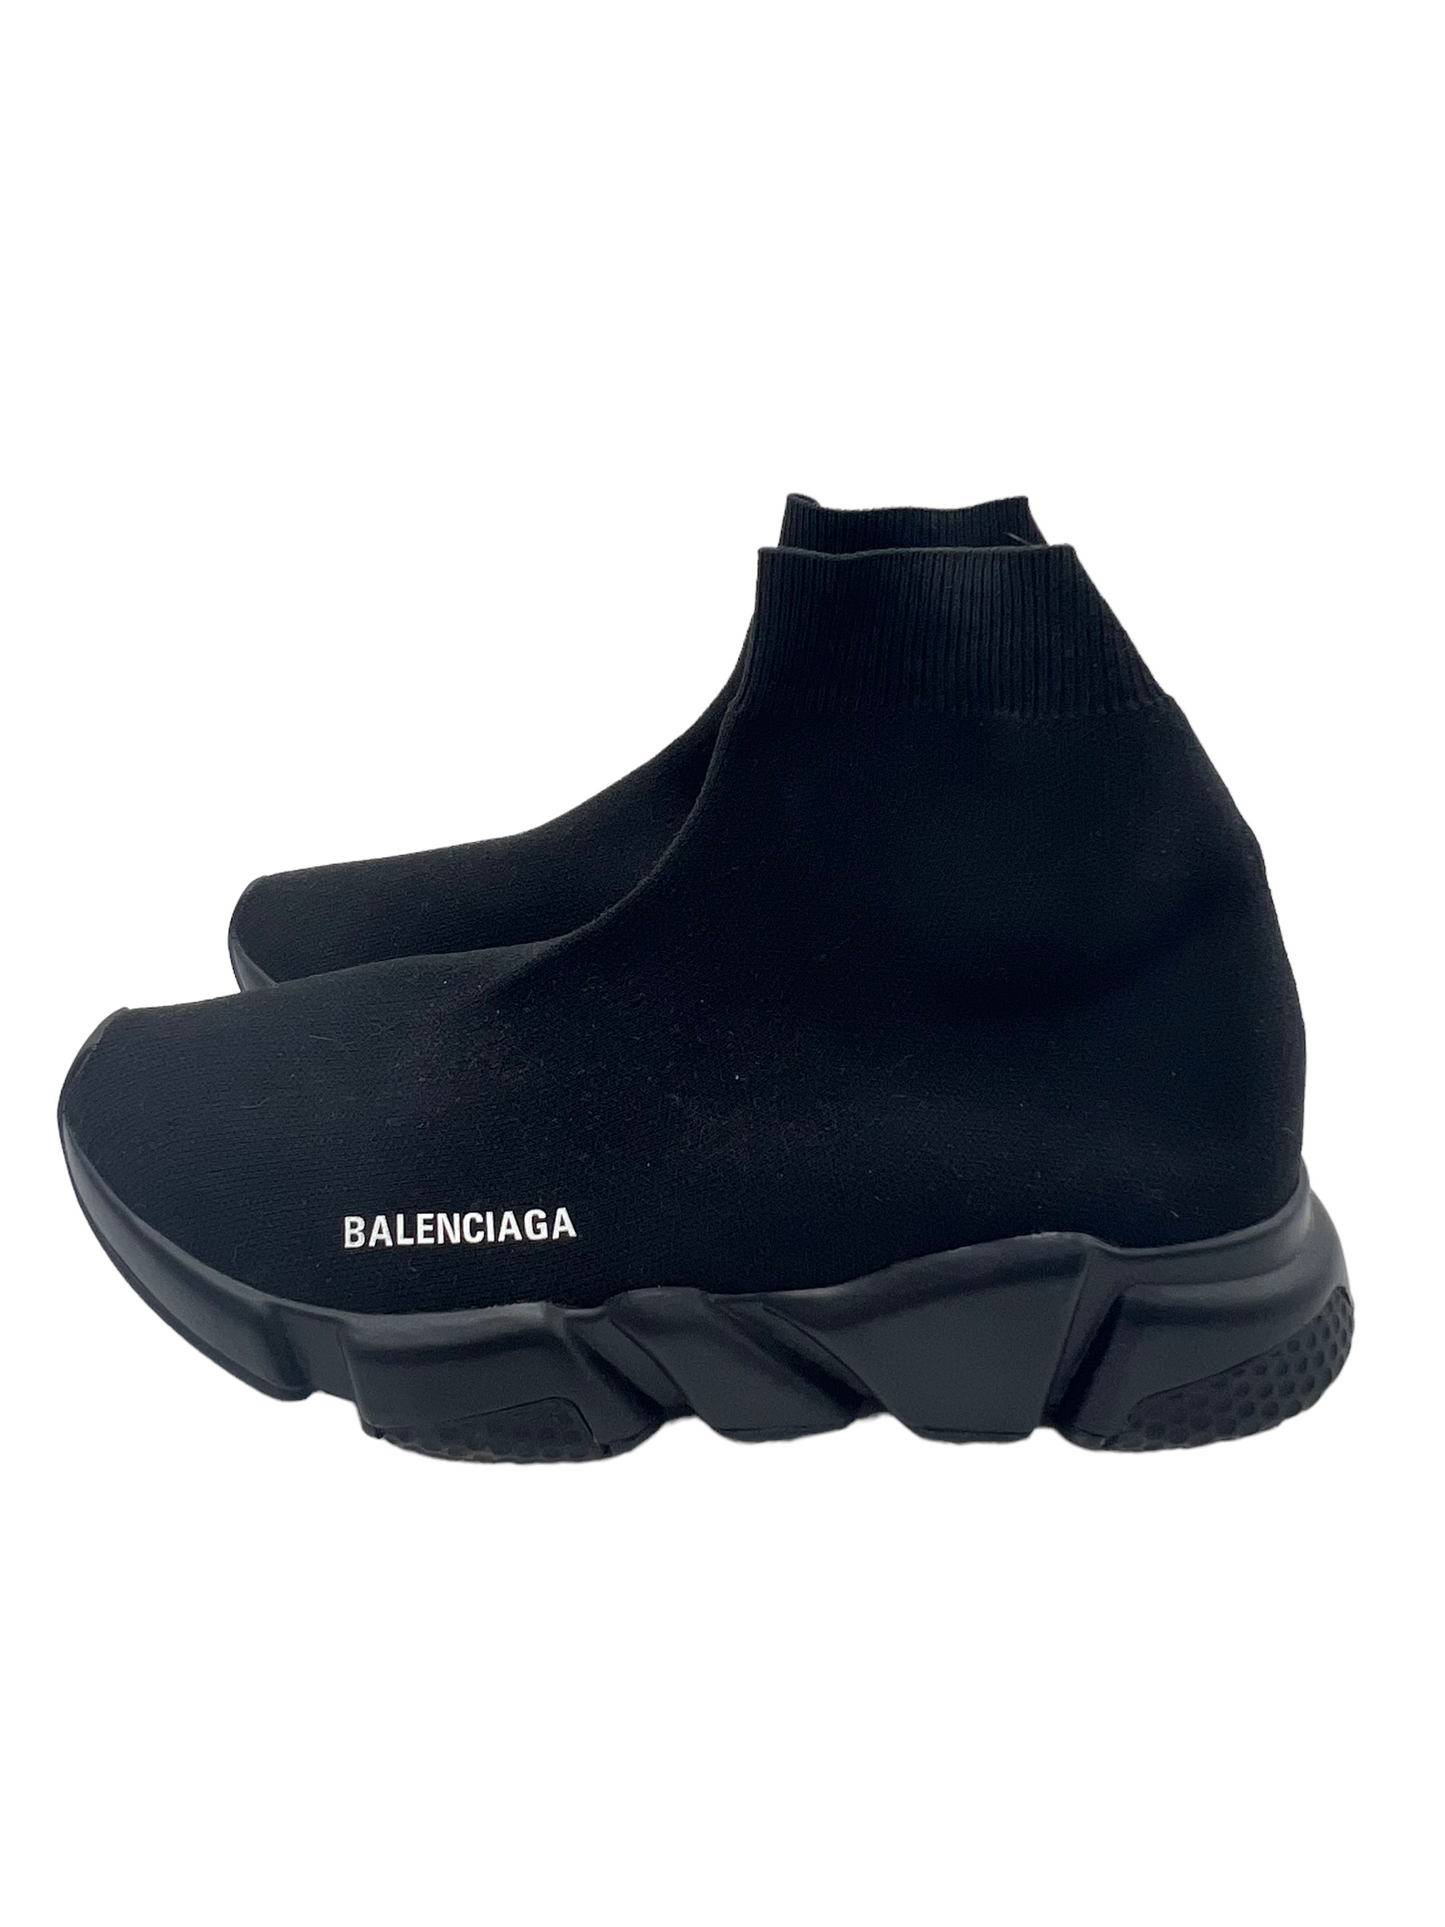 Balanciaga Black Women's Size 9 Speed Trainer Sneakers